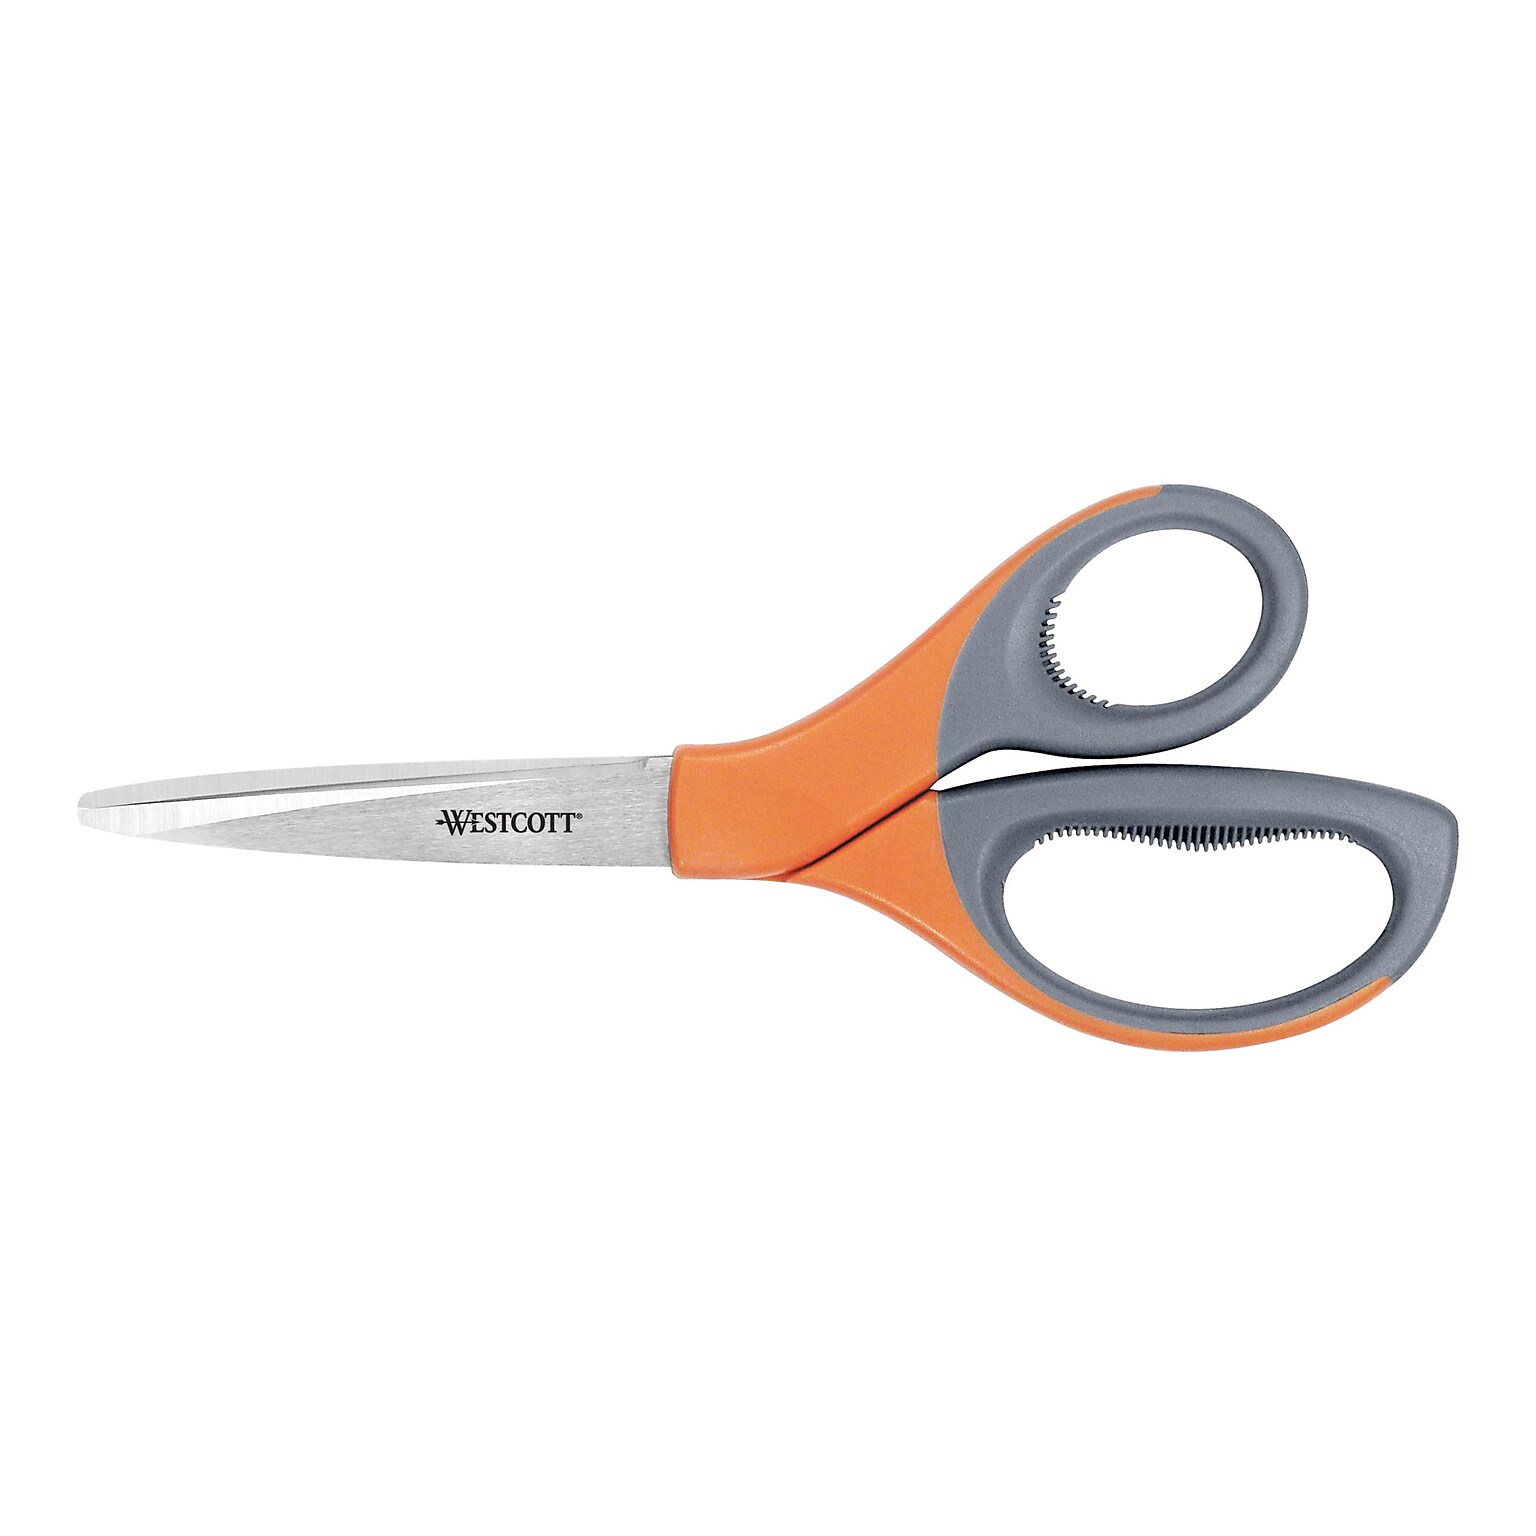 Westcott Elite 8 Stainless Steel Scissors, Pointed Tip, Orange/Gray (41318)